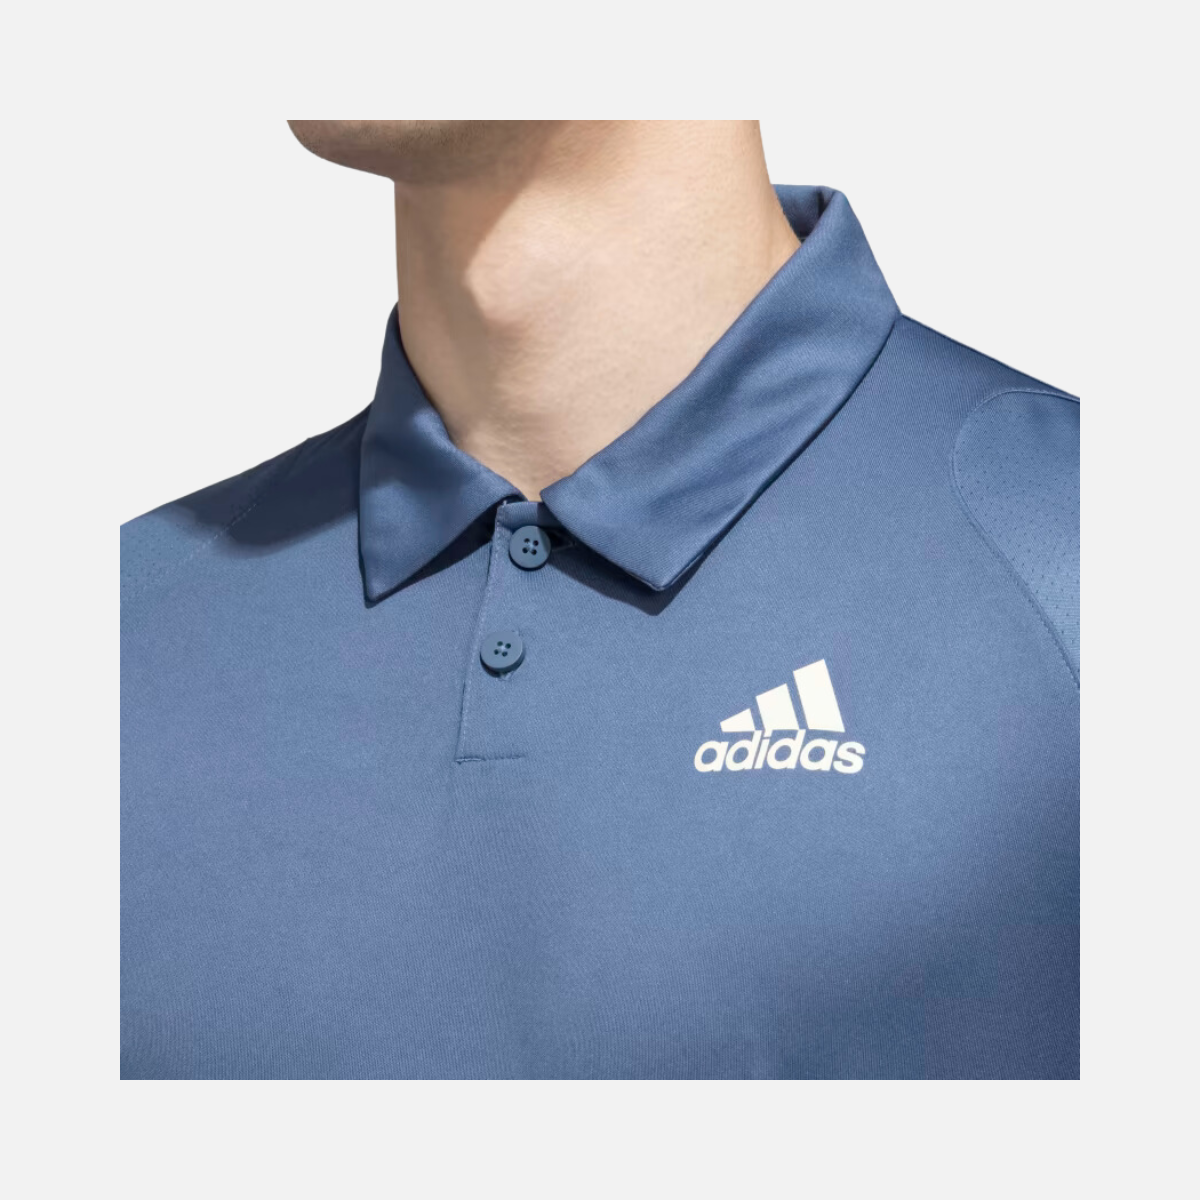 Adidas 3 Stripes Polo Men's Tennis T-shirt -Wonder Steel